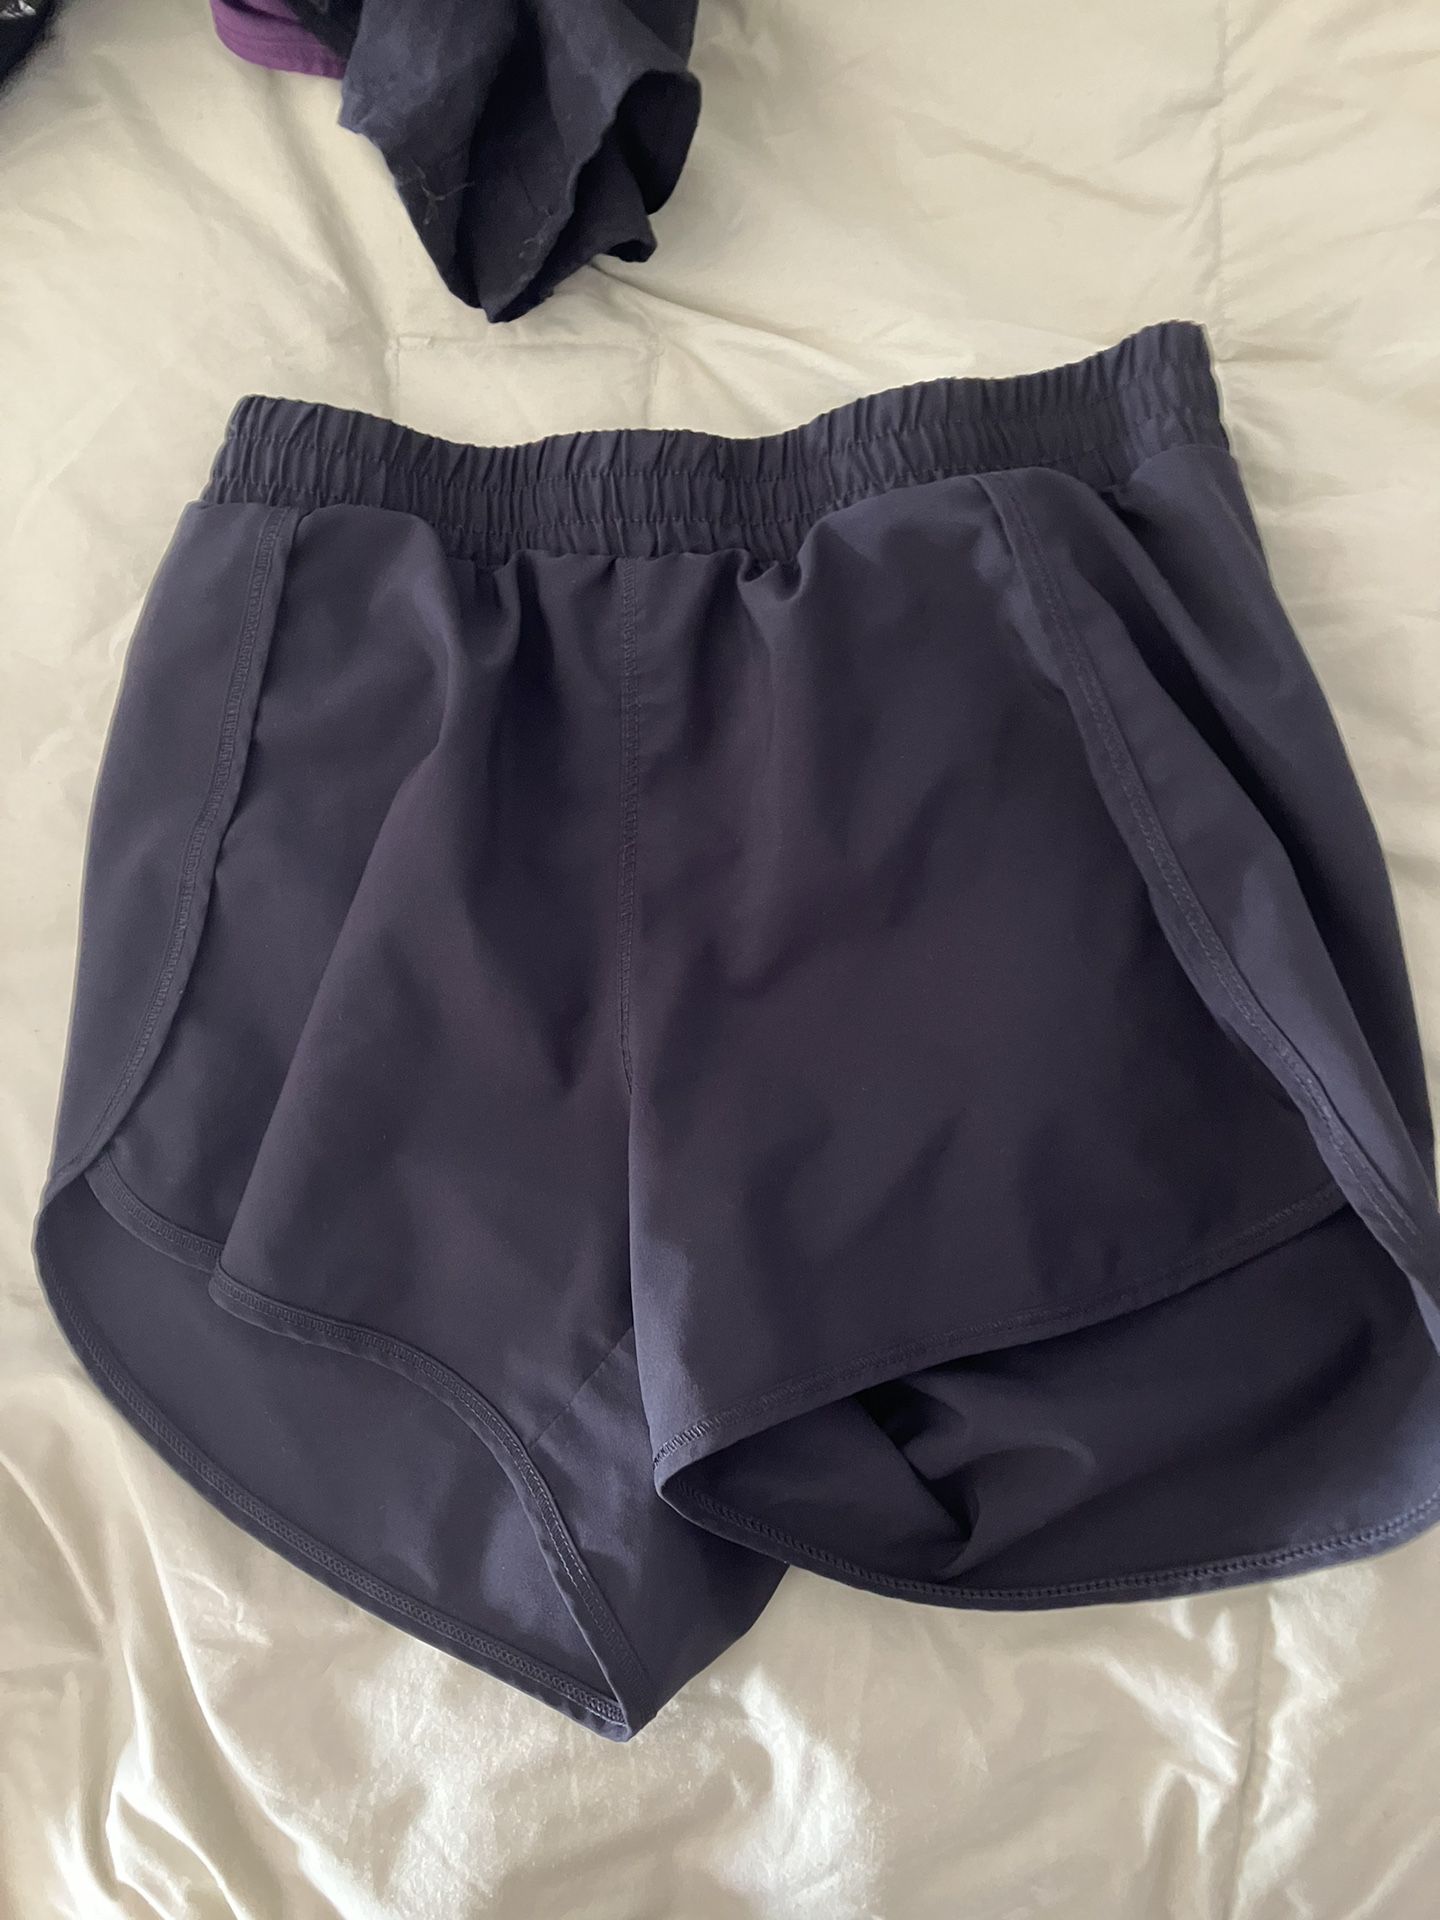 girls XL athletic shorts